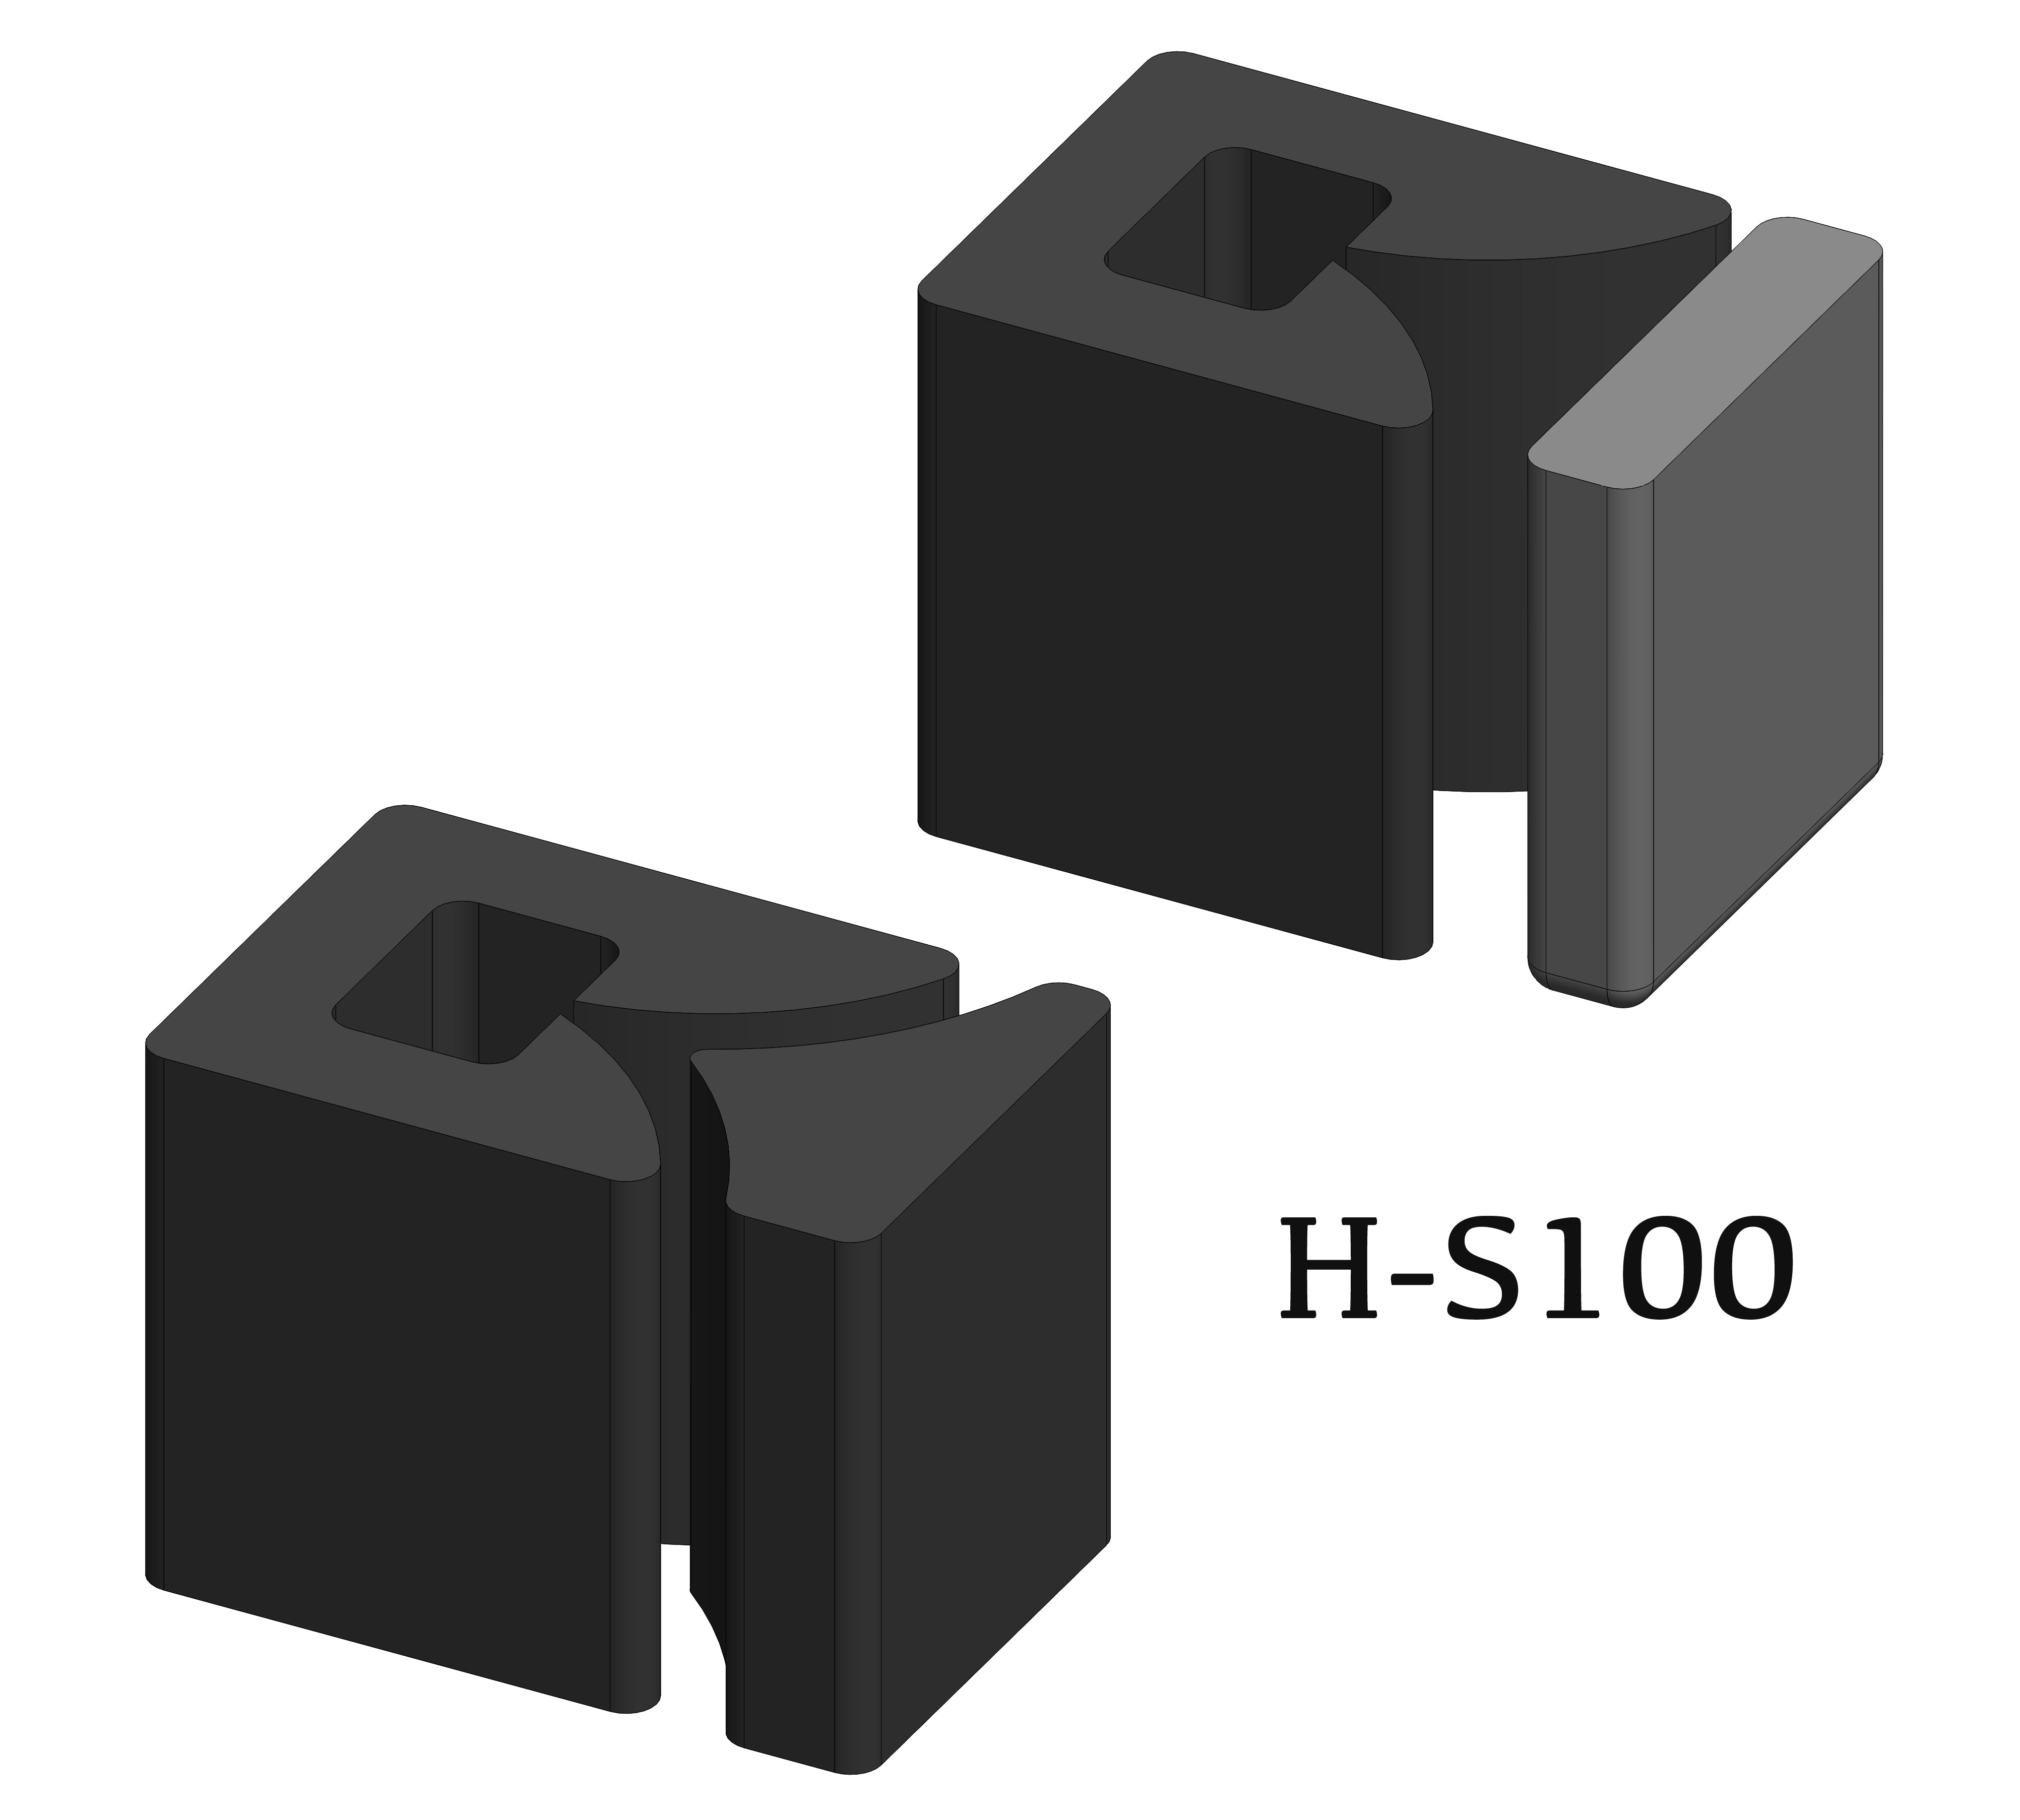 h-s100 c-corners clamps kit